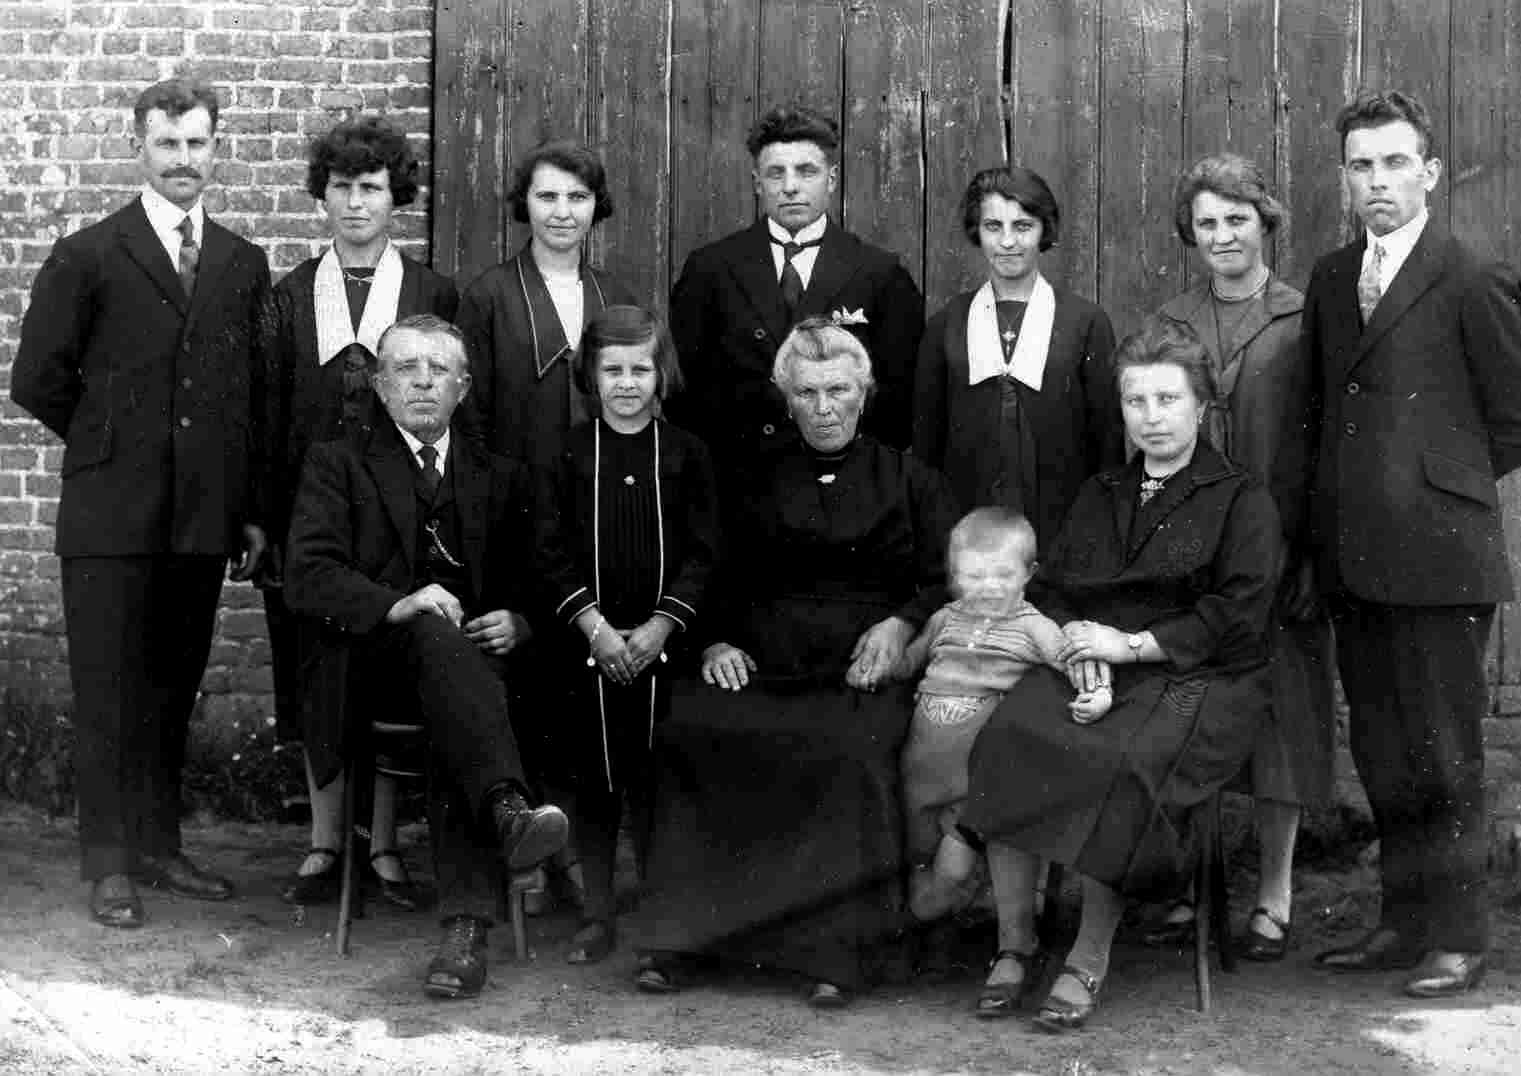 Famili Gyssels-Minne in the 1920s